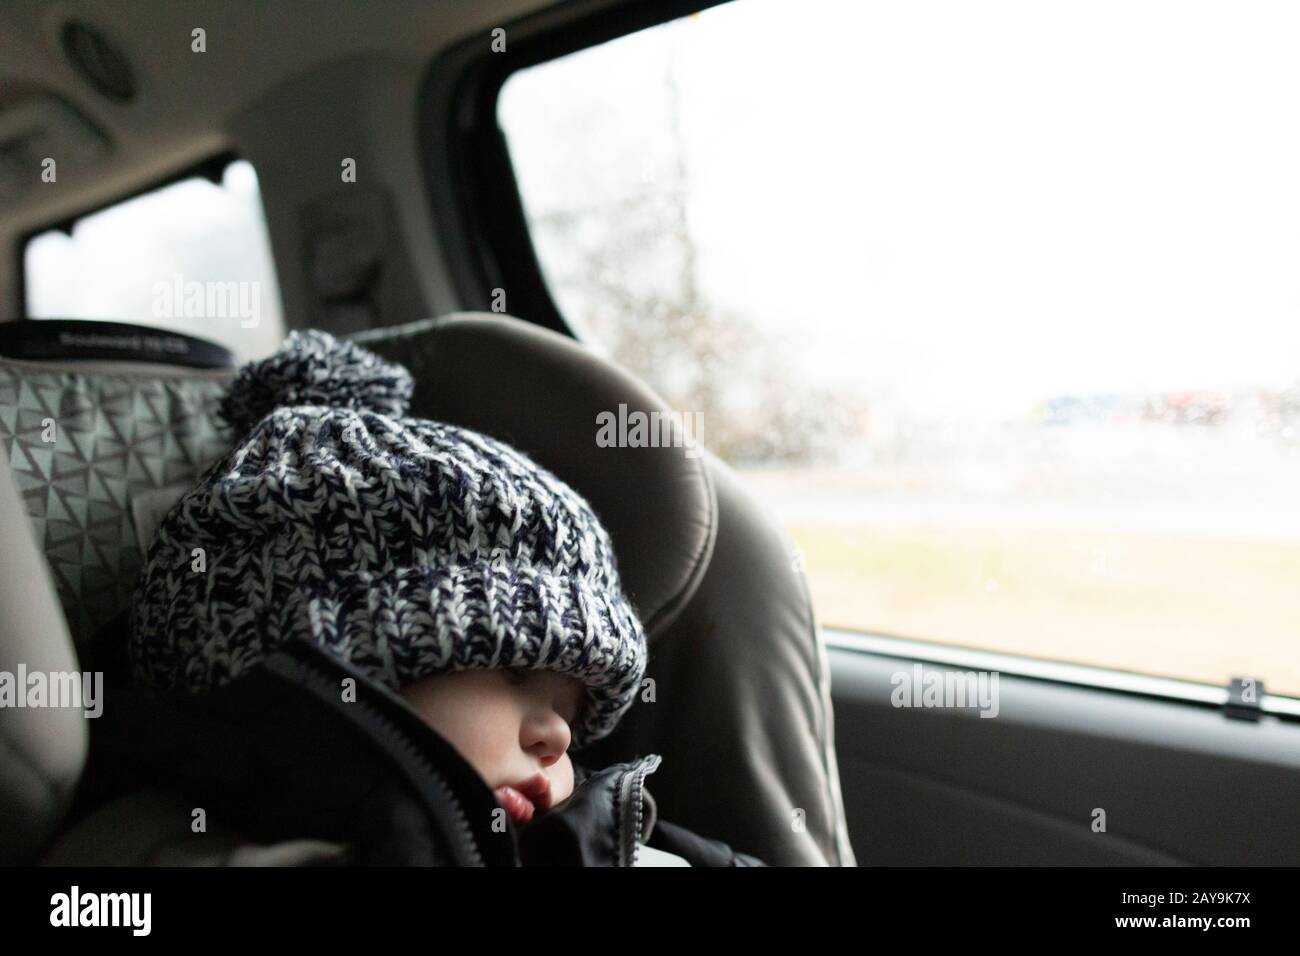 Toddler wearing winter hat sleeps while in carseat inside minivan Stock Photo